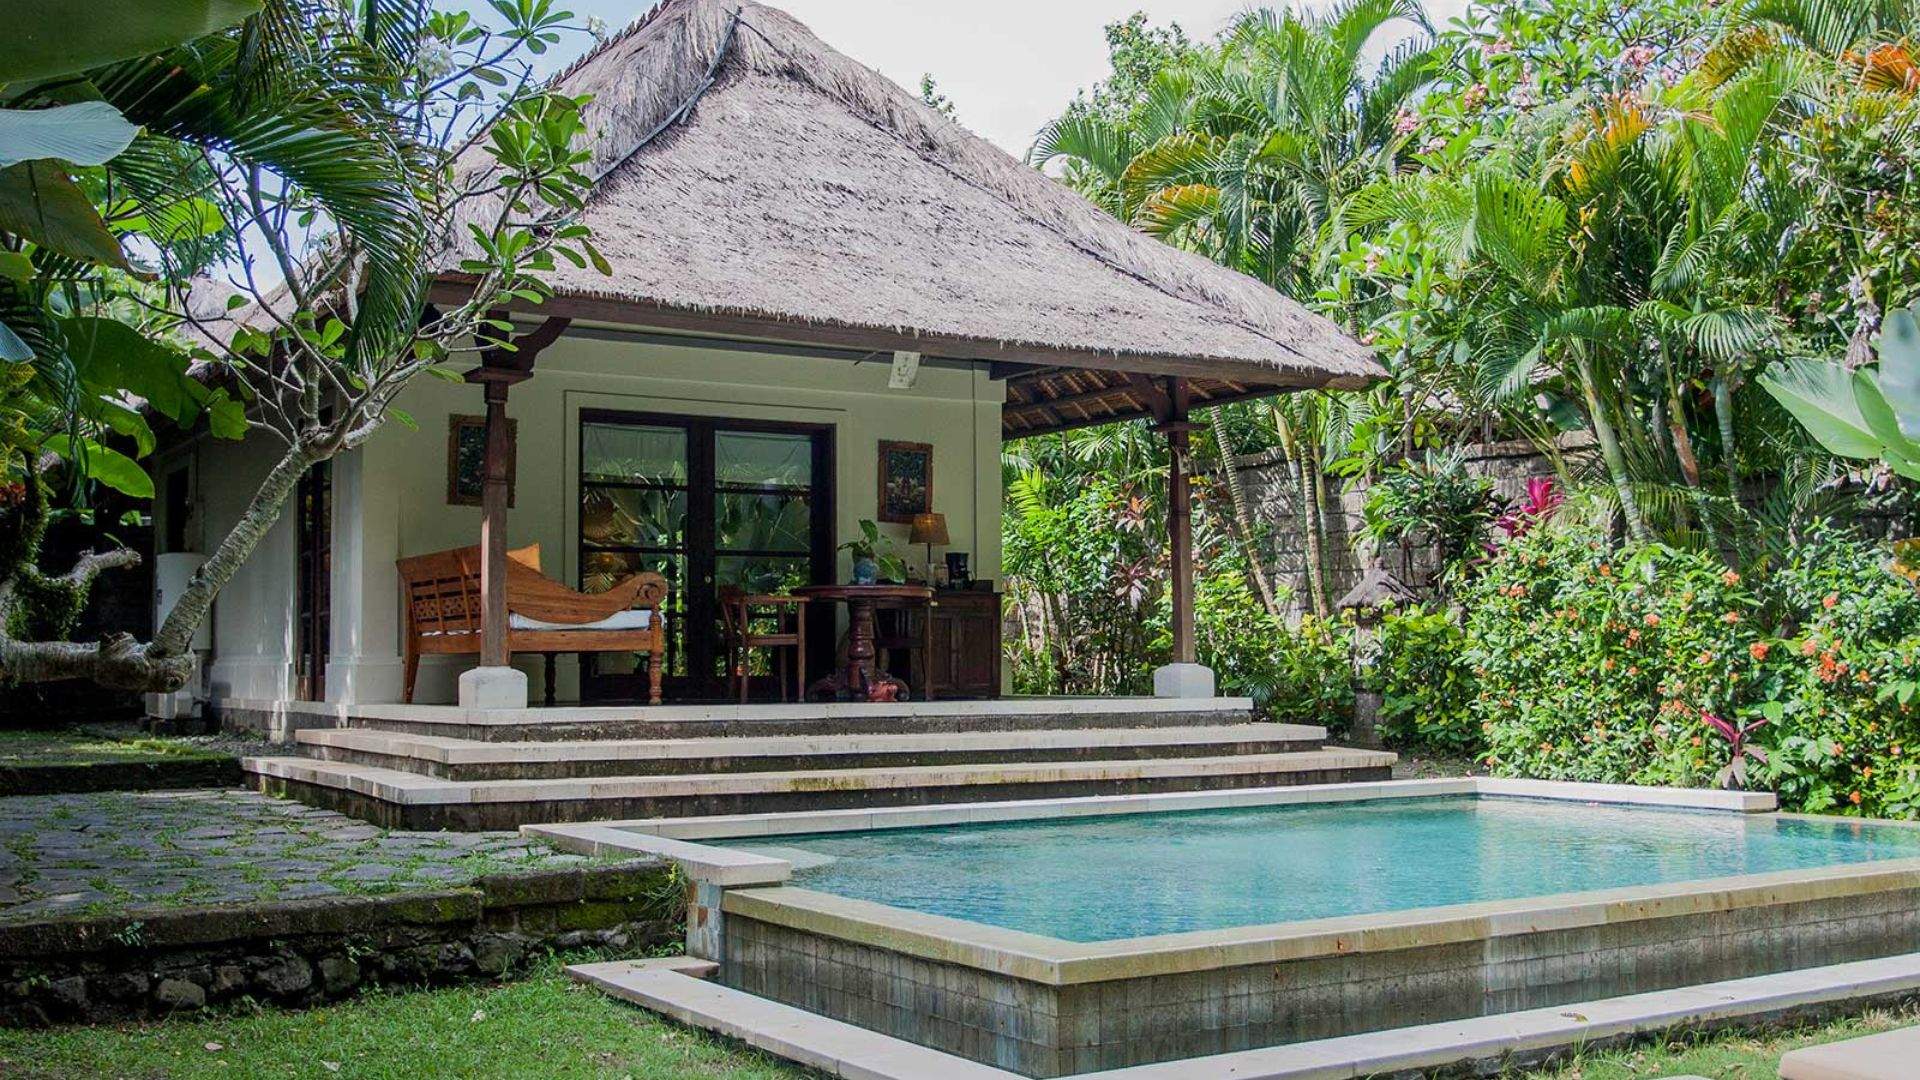 Stay of the Week: Plataran Canggu Bali Resort and Spa